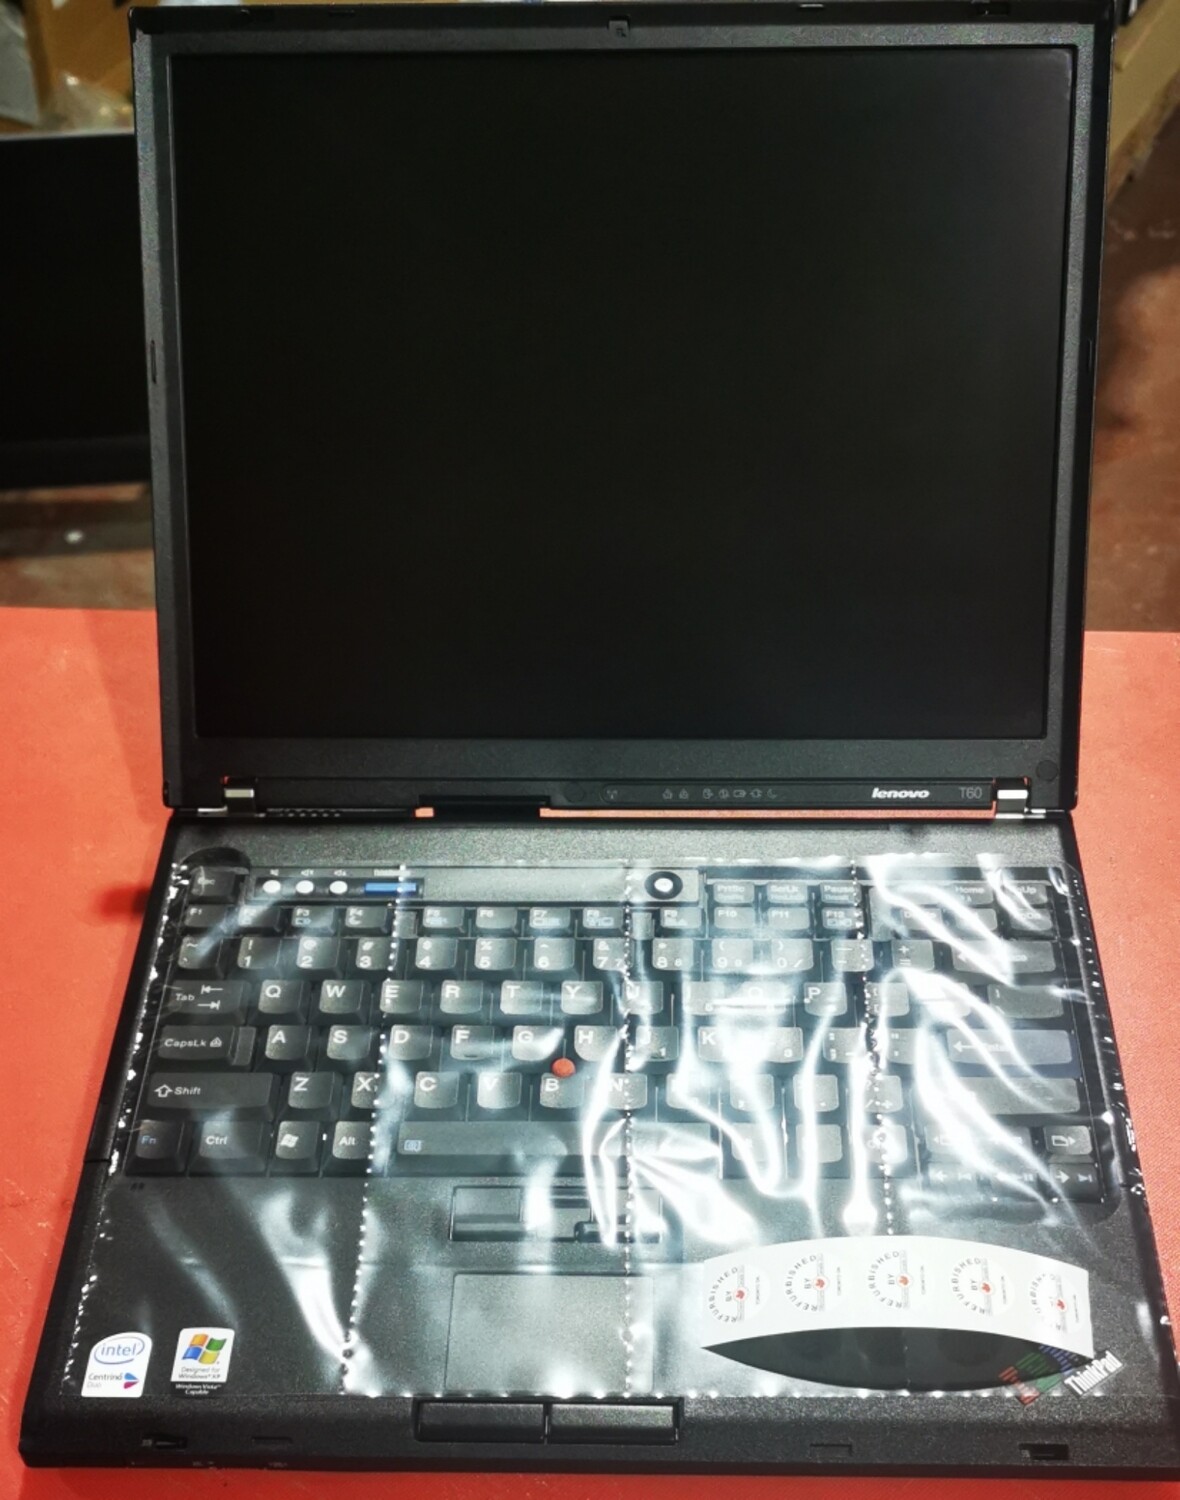 1951-43U | IBM ThinkPad T60 Core Duo 1.83GHz Laptop | 195143U